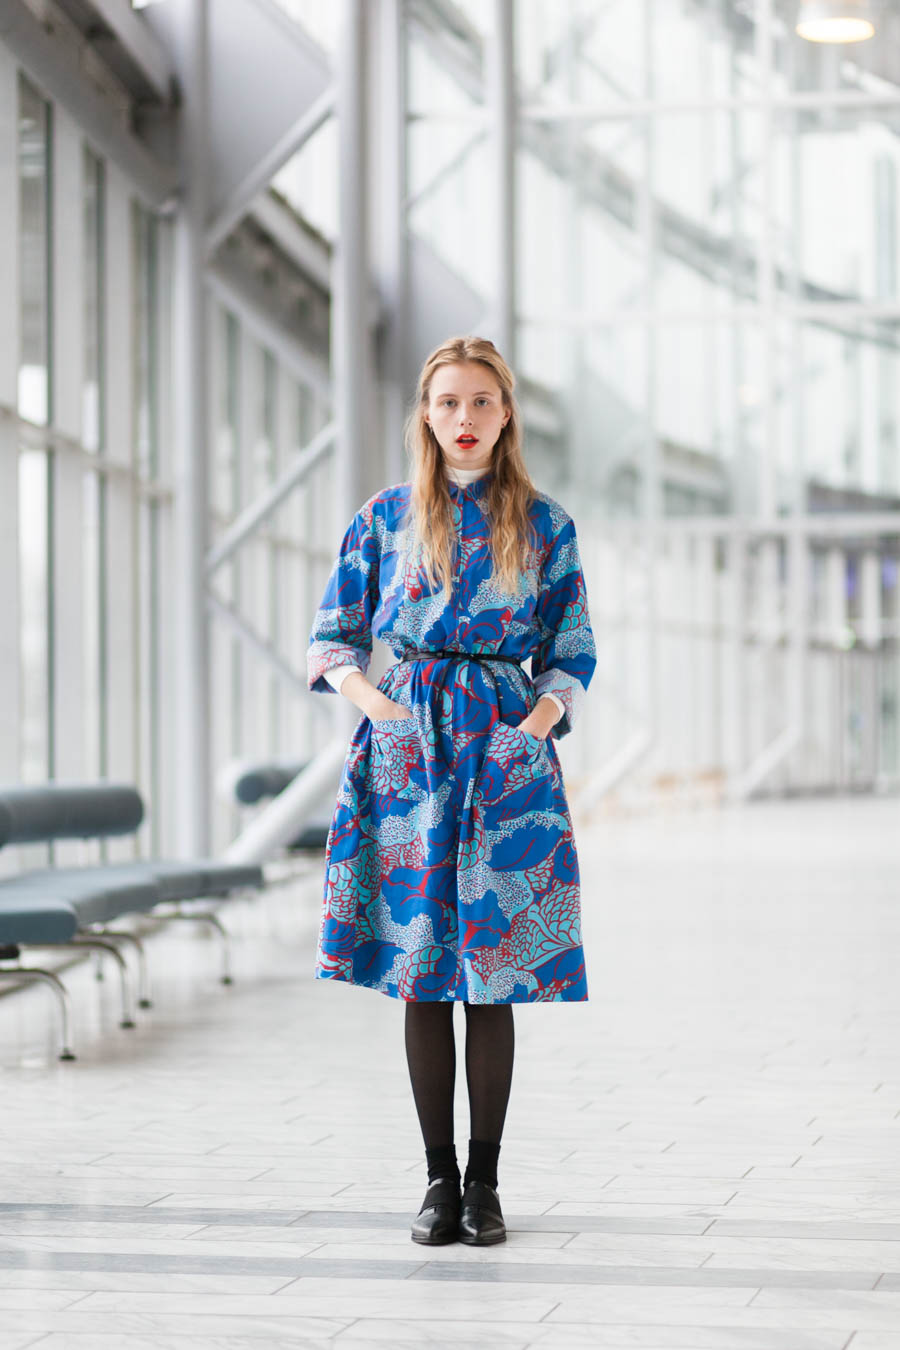 outfit December nemesis babe marie jensen danish blogger -7